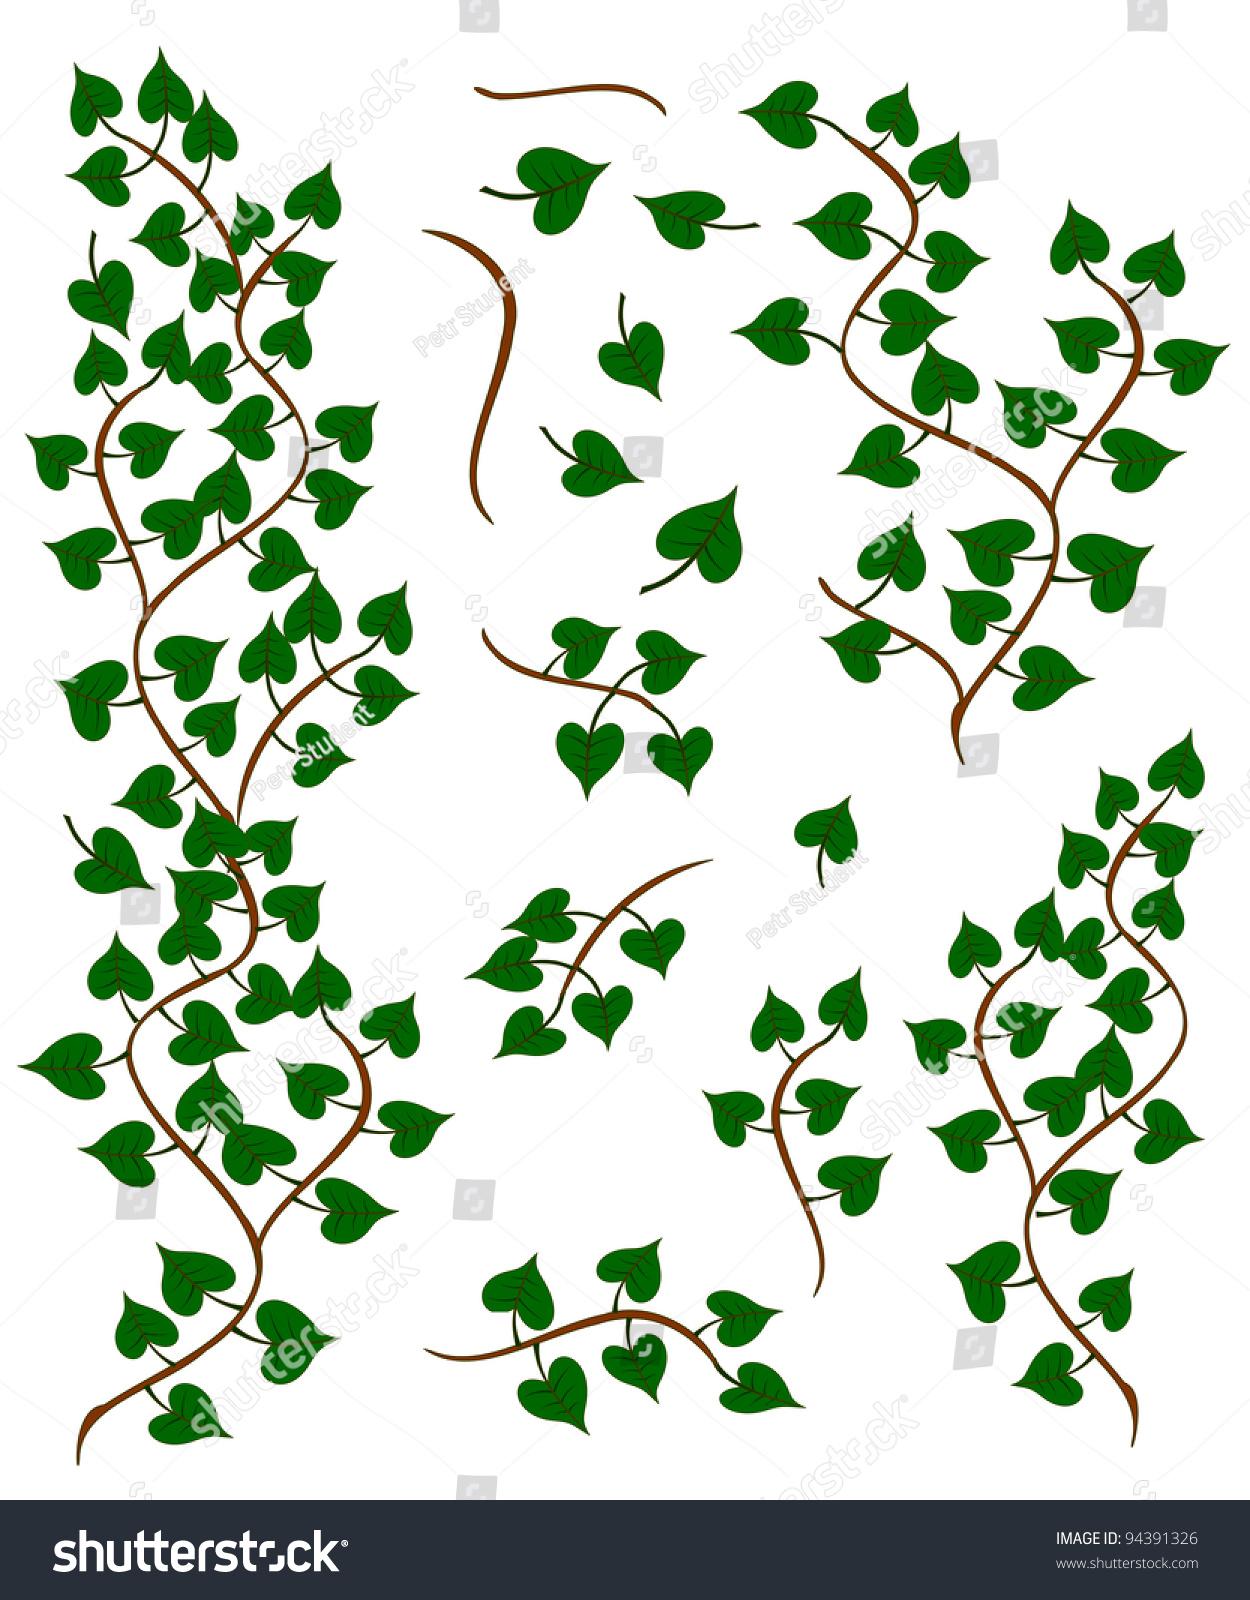 Edit Vectors Free Online - Leafy tree | Shutterstock Editor